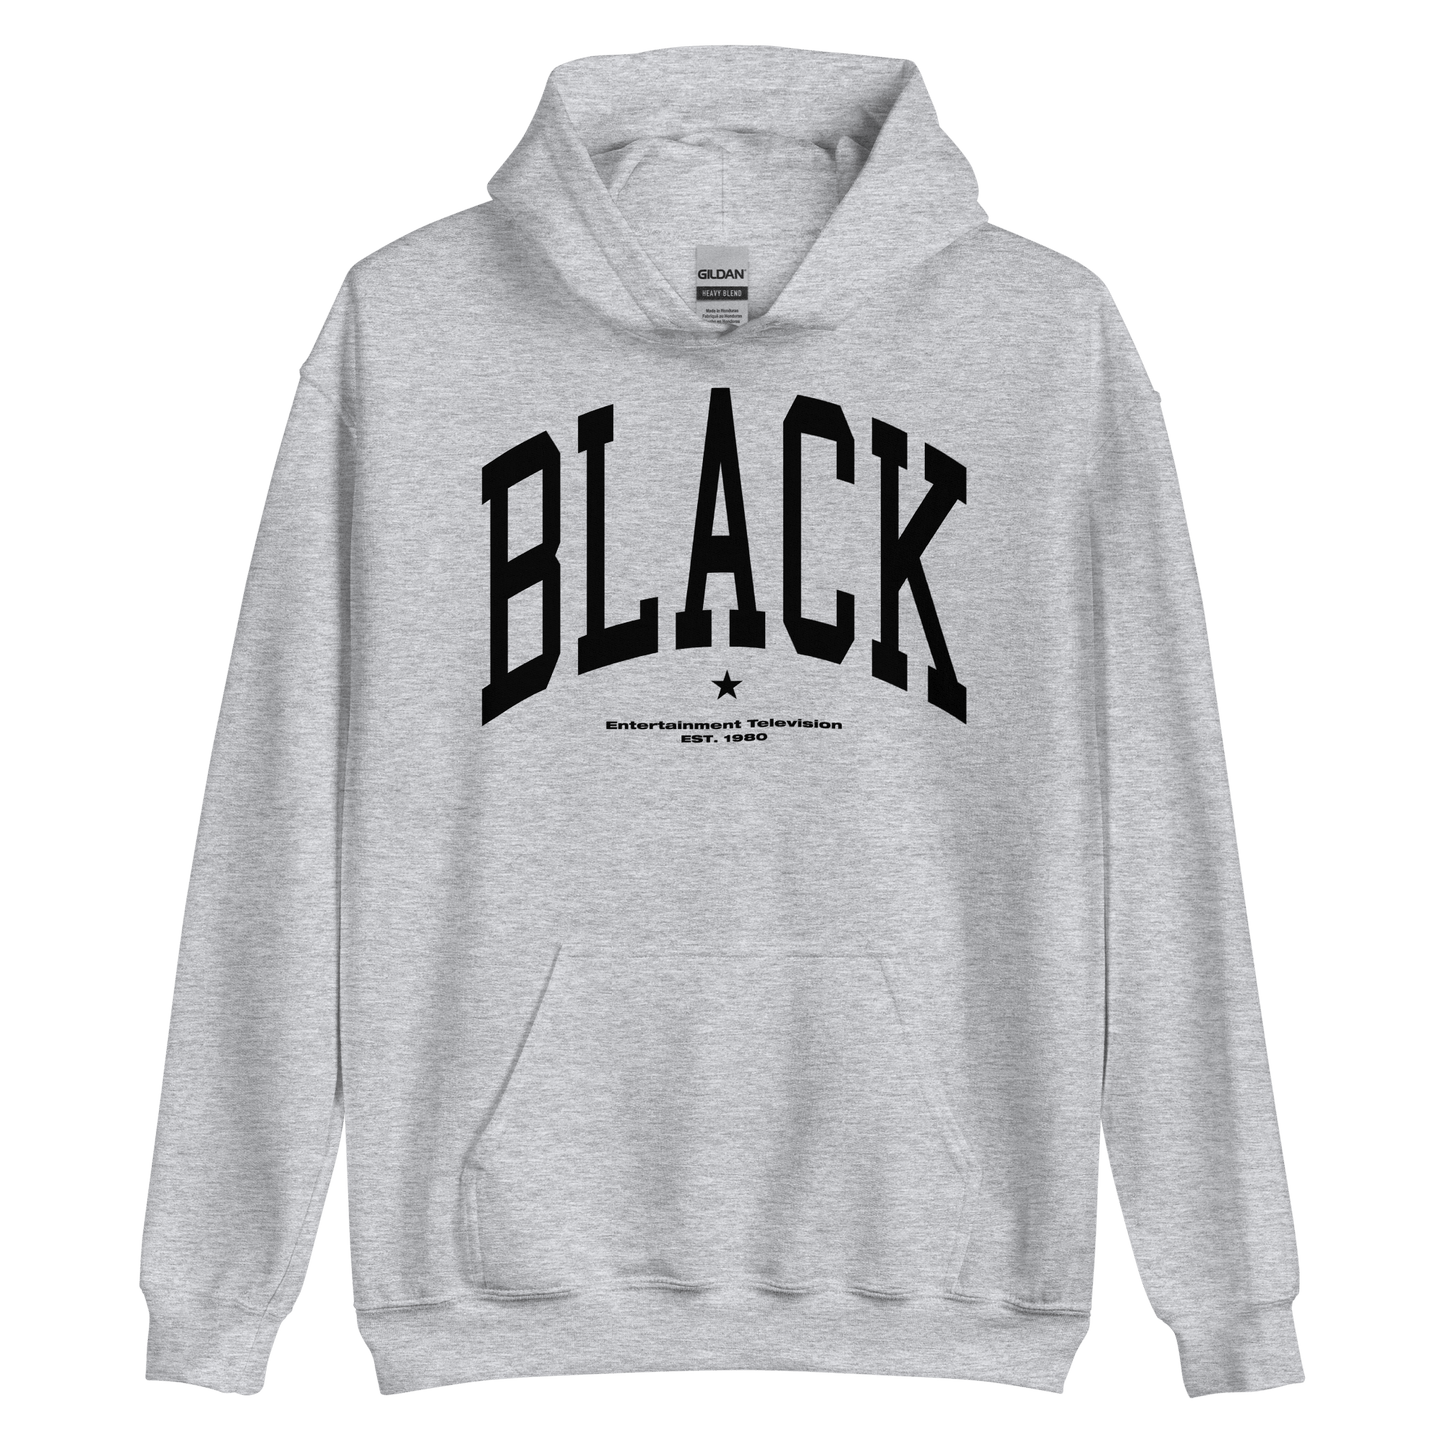 BET Black Collegiate Hooded Sweatshirt - Paramount Shop